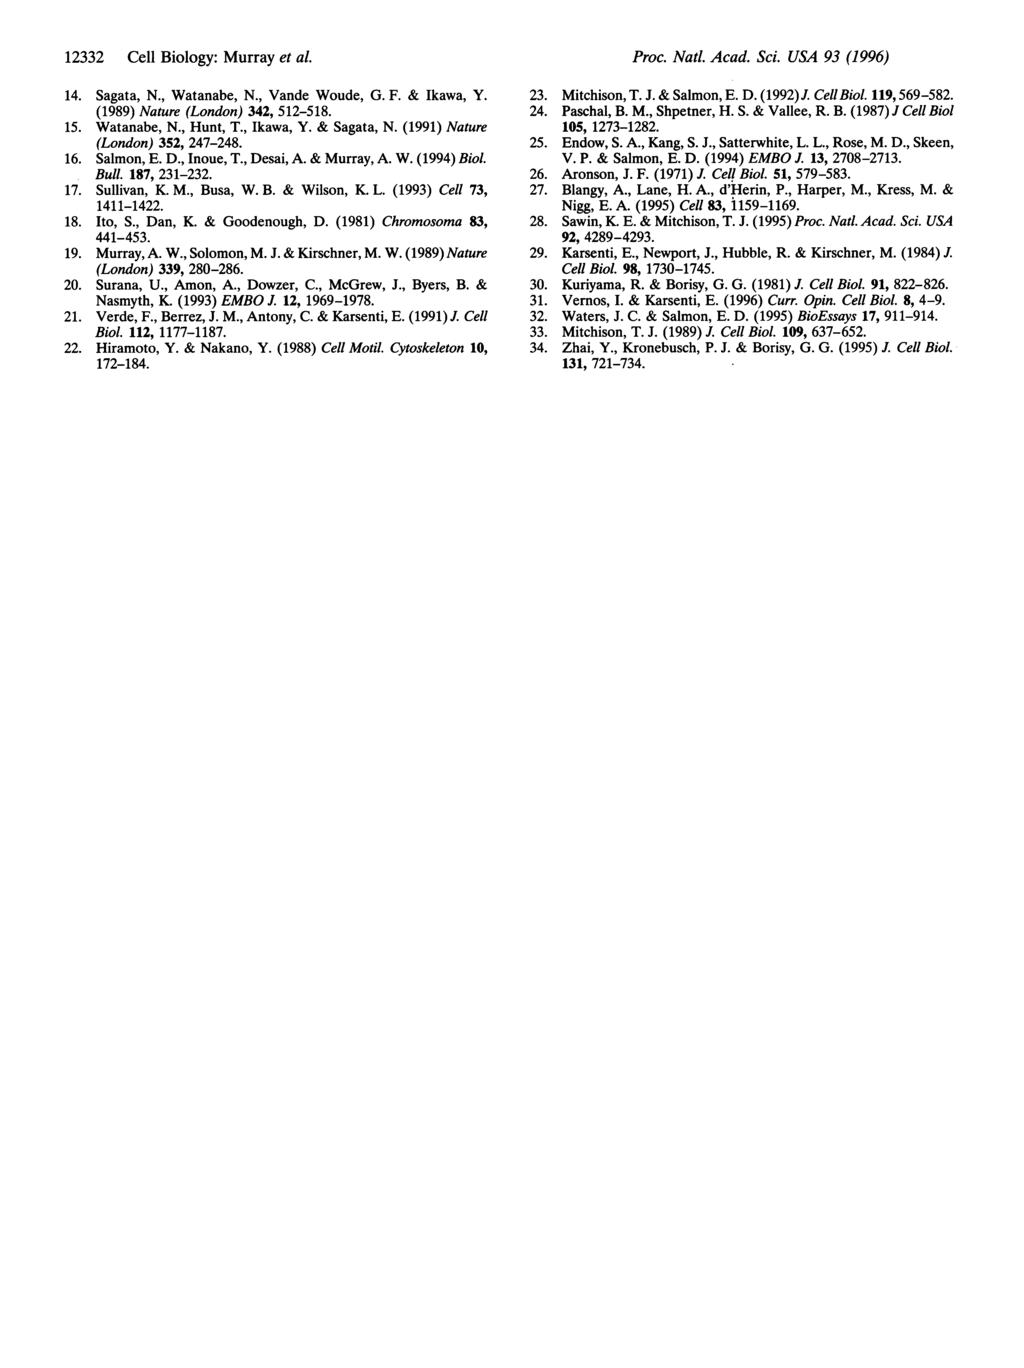 12332 Cell Biology: Murray et al. 14. Sagata, N., Watanabe, N., Vande Woude, G. F. & Ikawa, Y. (1989) Nature (London) 342, 512-518. 15. Watanabe, N., Hunt, T., Ikawa, Y. & Sagata, N.